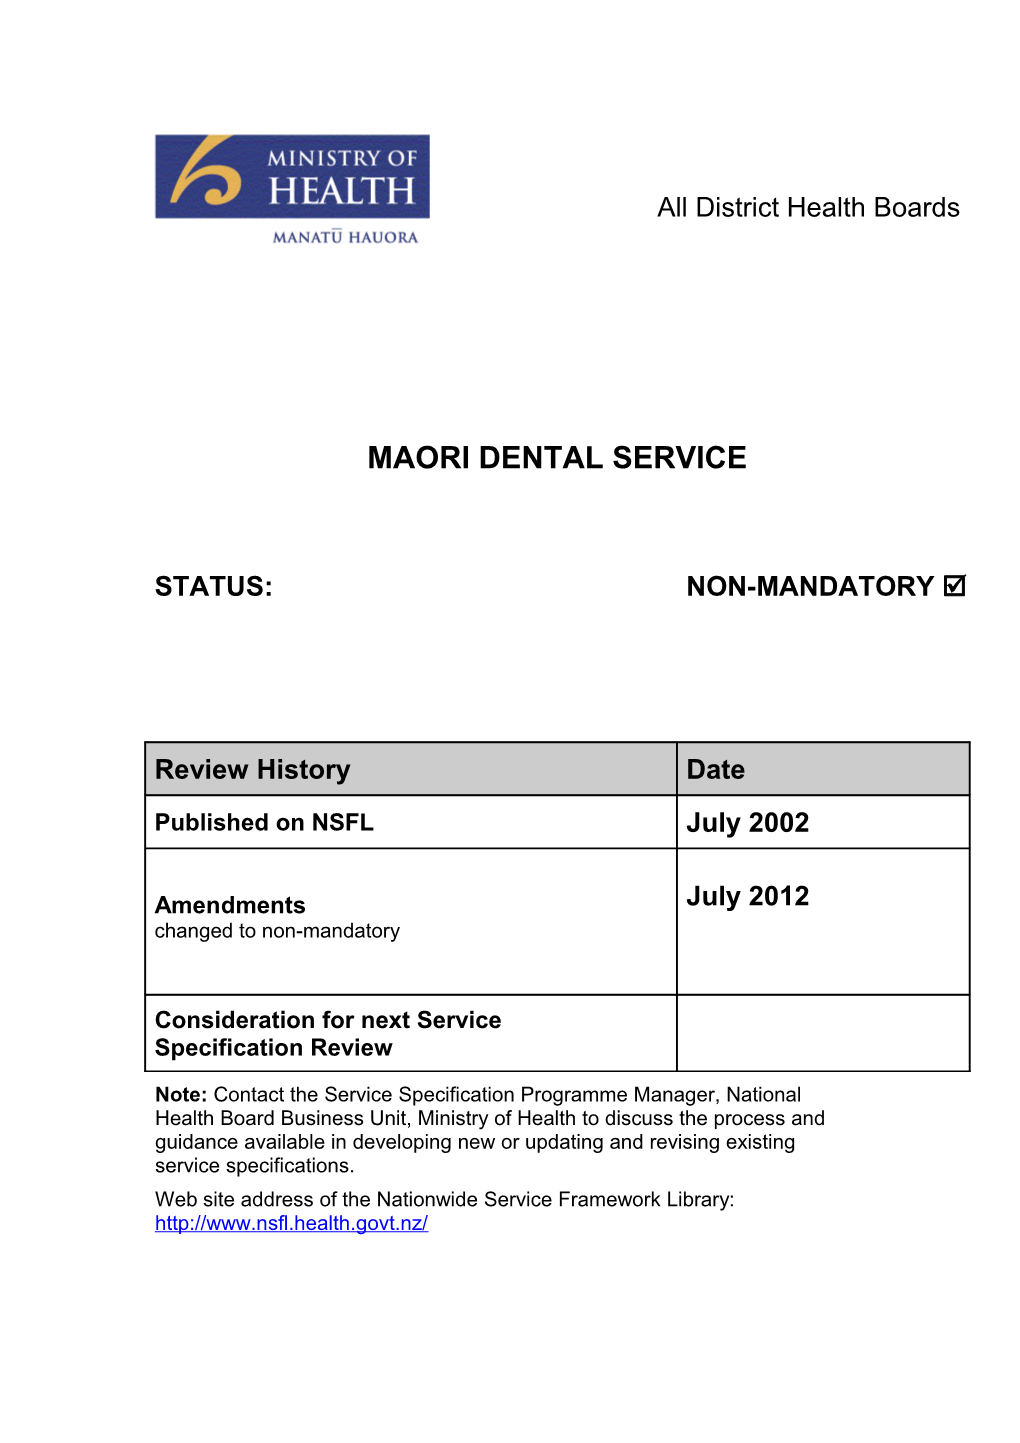 Maori Dental Service